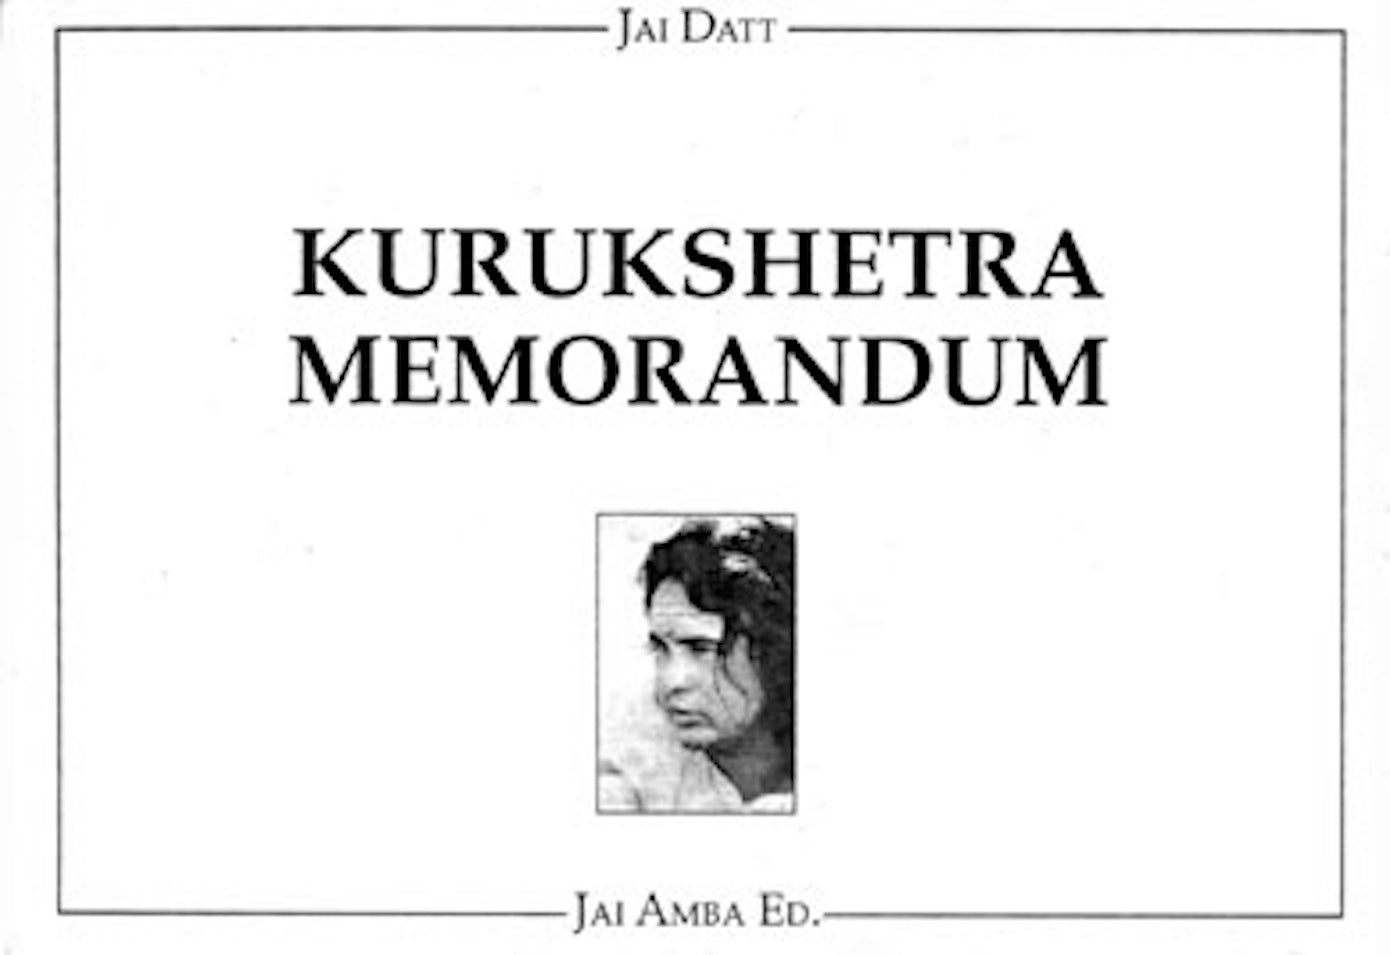 Kurukshetra Memorandum: Annunciation, Gestation and Delivery of a New Mankind - Hindu Sanatan Dharma Spirituality Self-Healing Affirmations Book by Jai Datt